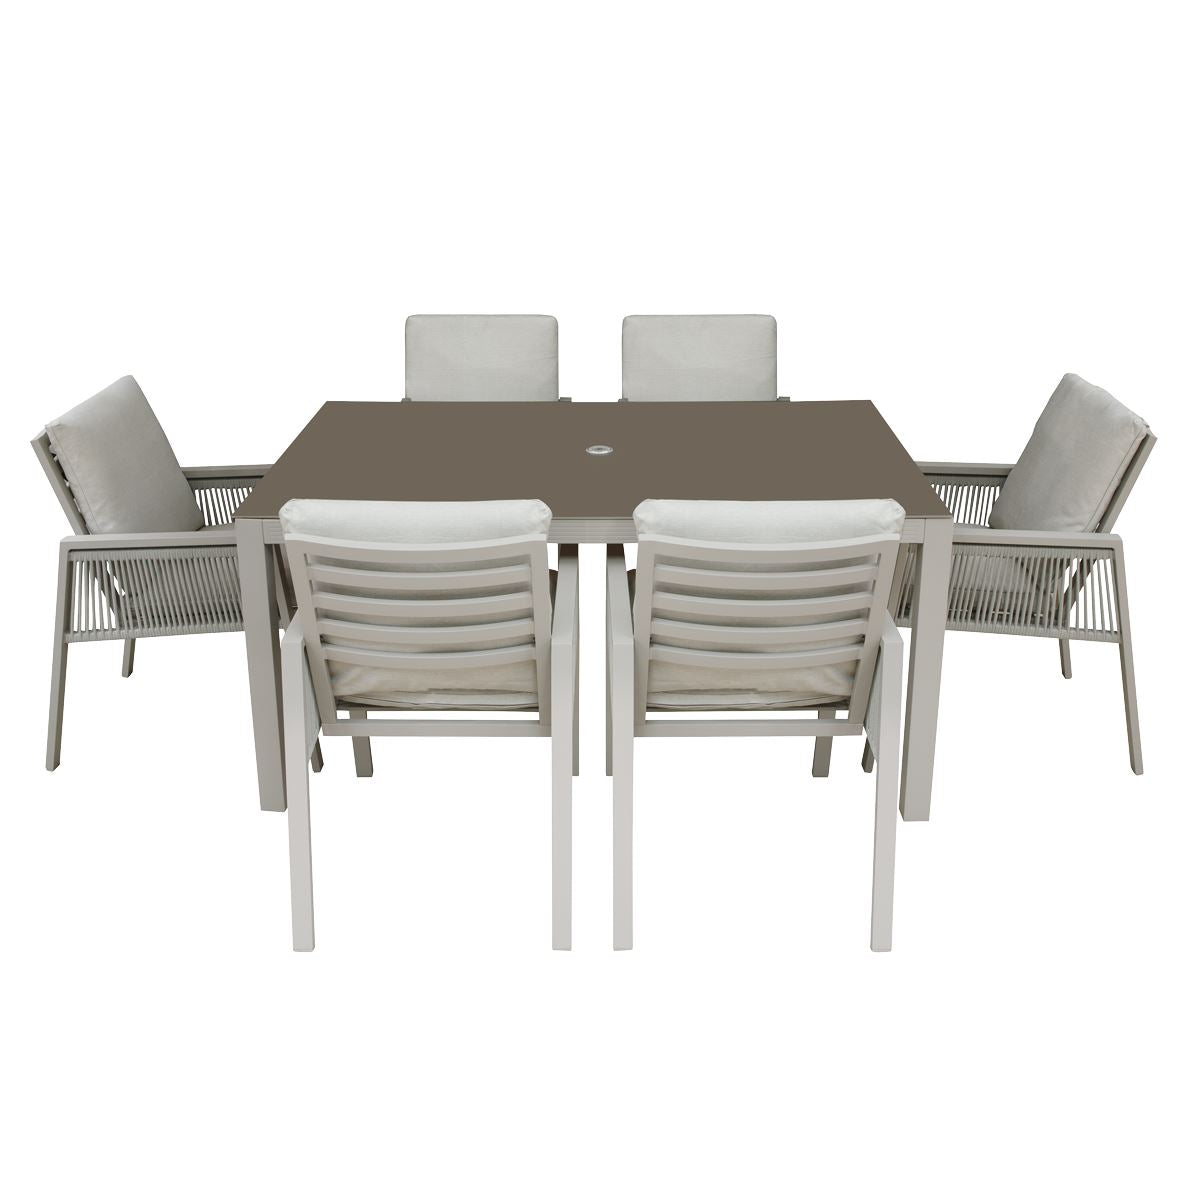 Dellonda Fusion 7 Piece Outdoor Dining Set with Weatherproof Aluminium Frame, Light Grey